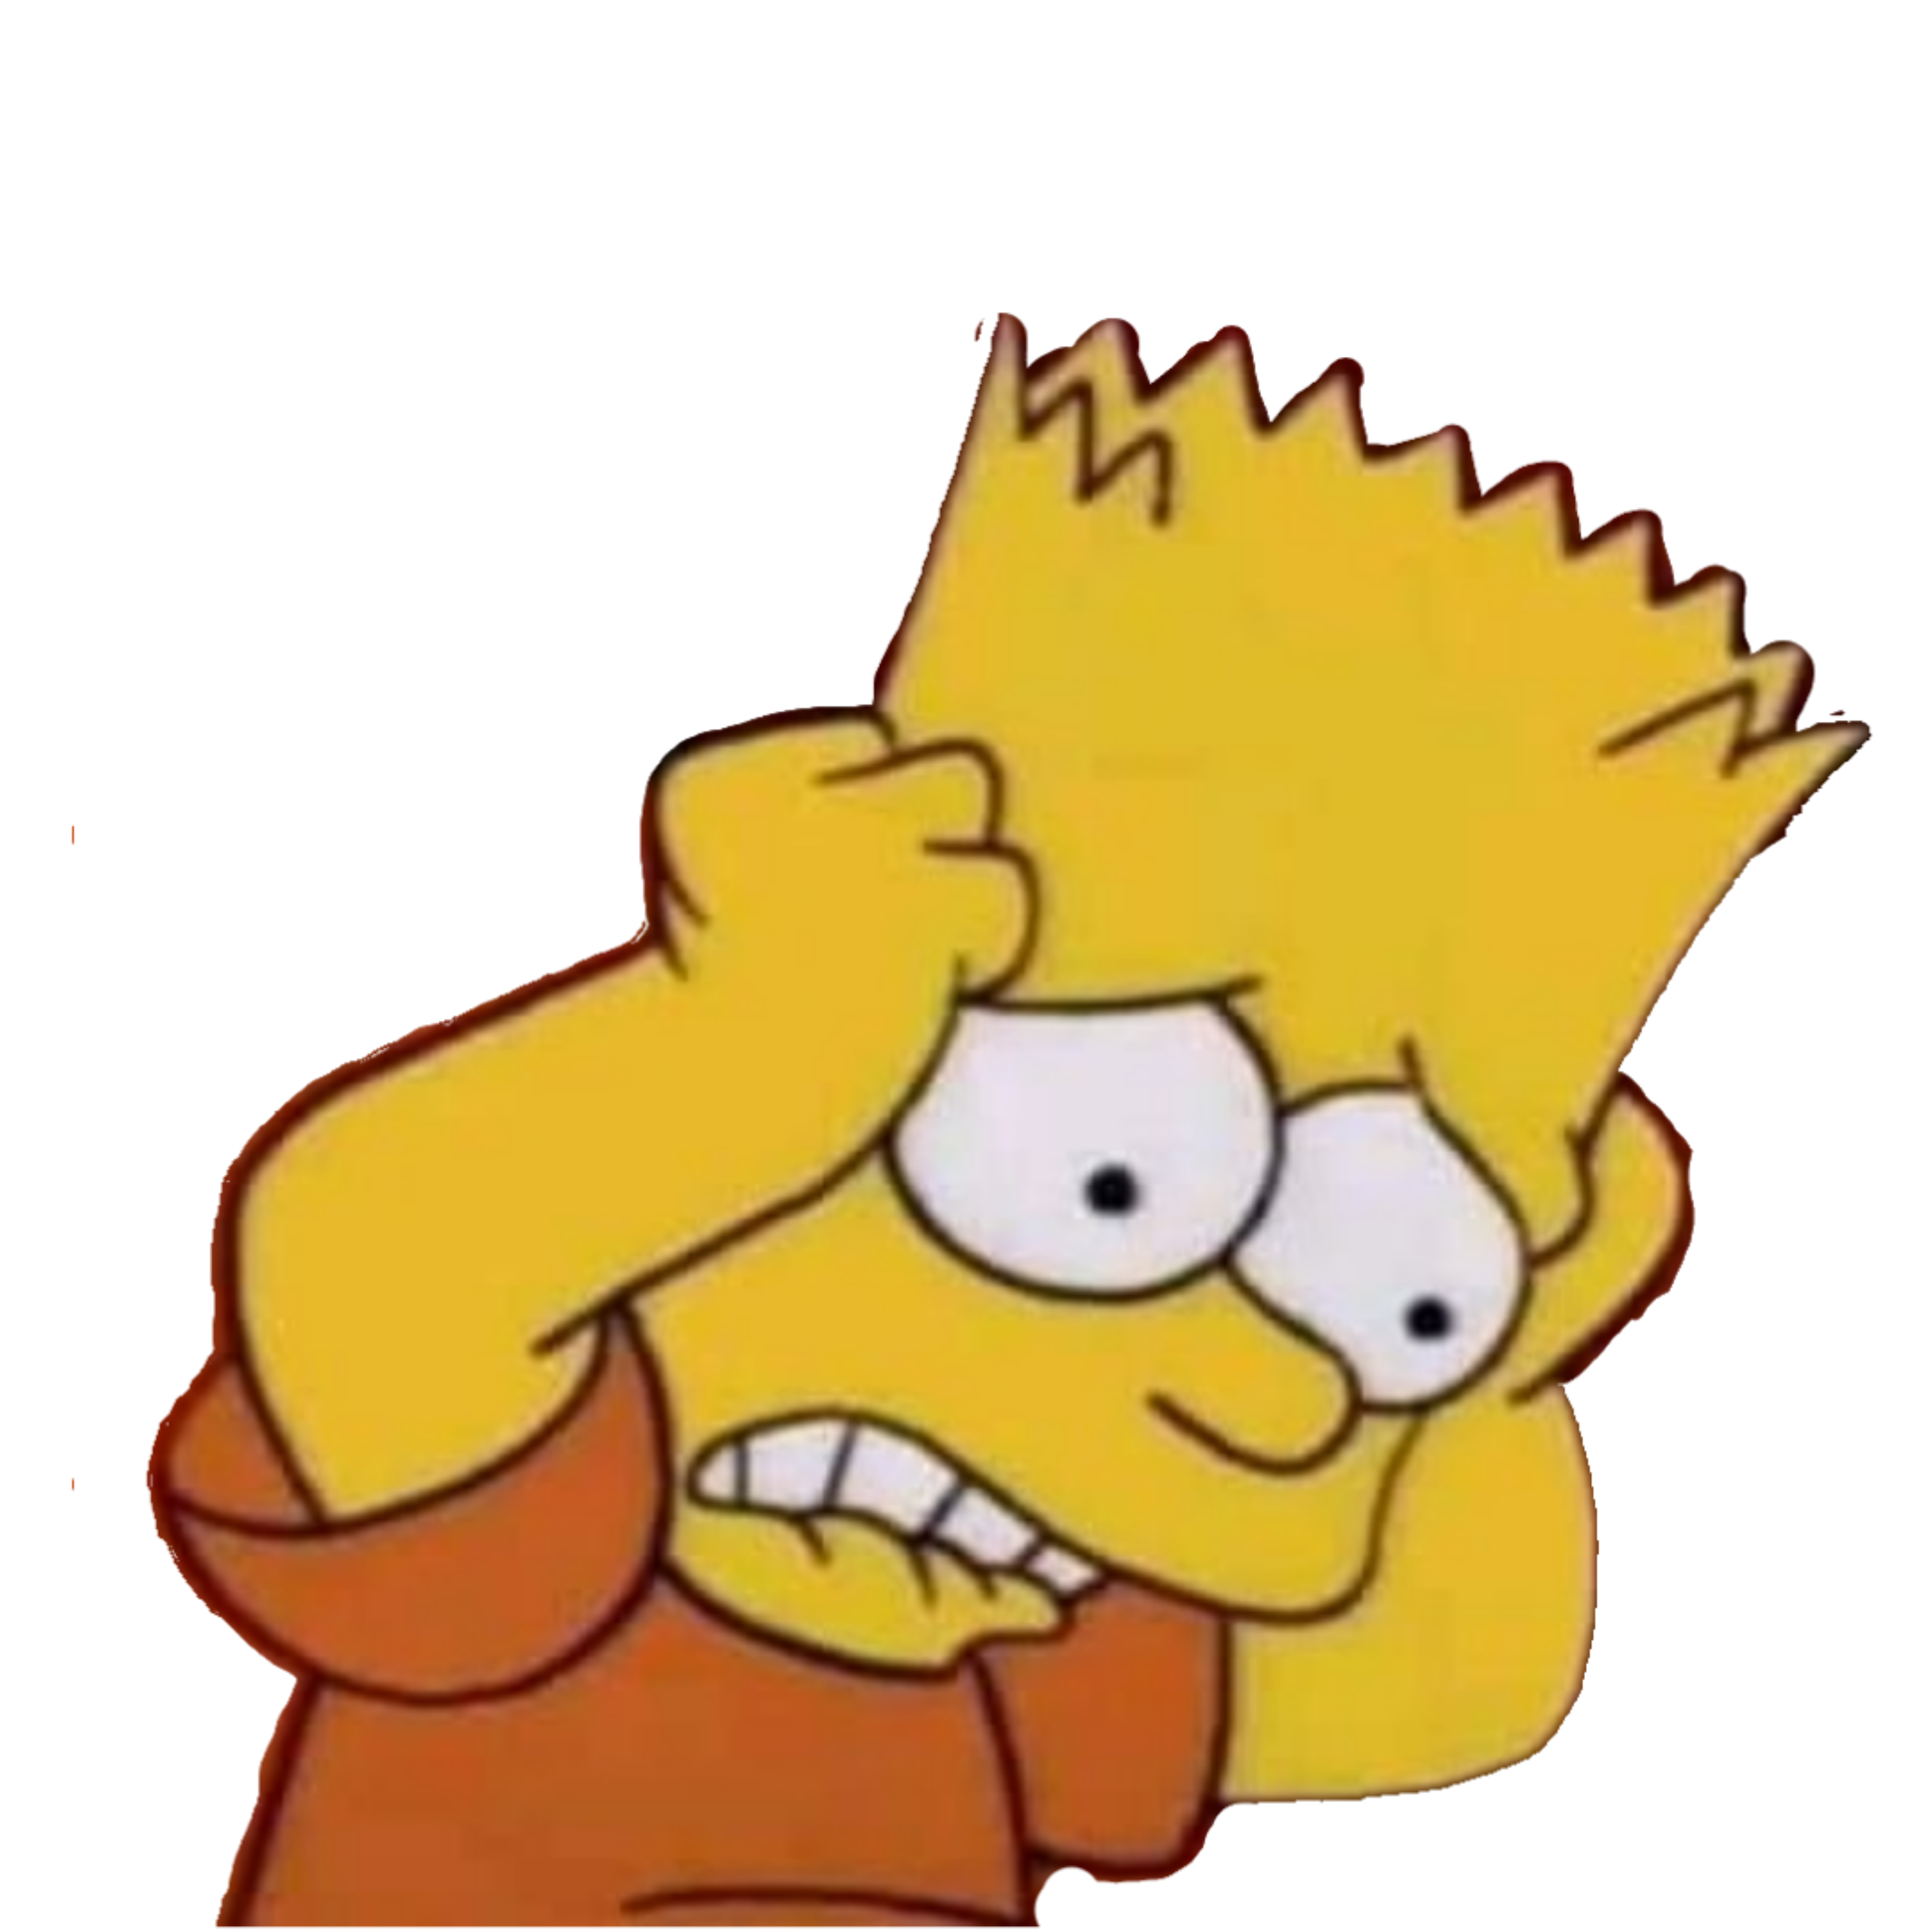 Sad Bart : Sad Bart Simpson Wallpapers - Top Free Sad Bart Simpson